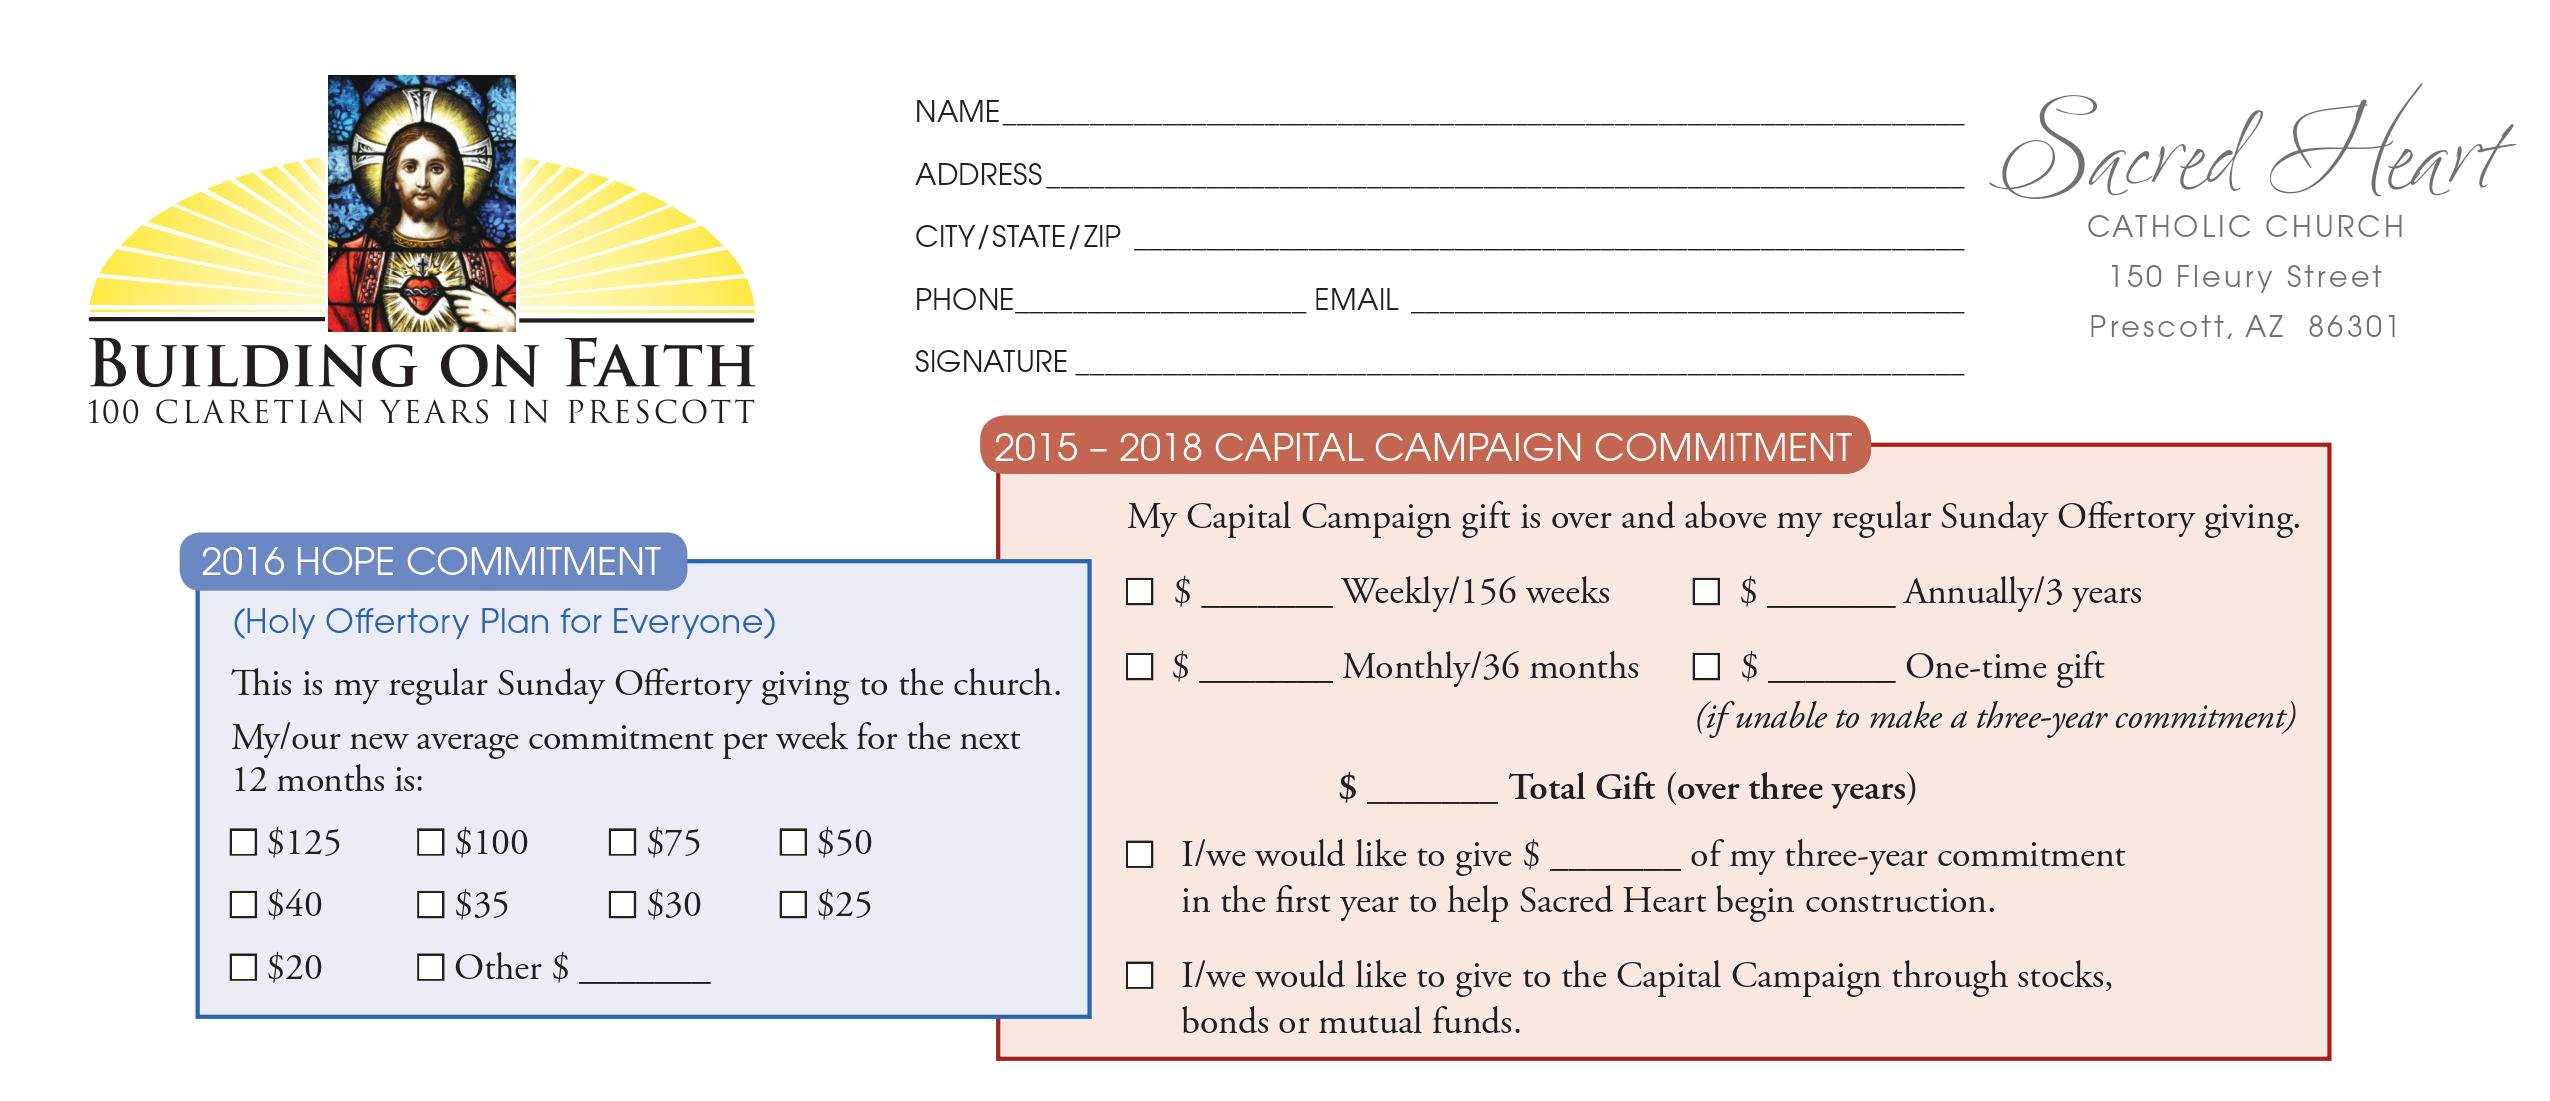 Pledge Card Examples - Calep.midnightpig.co Regarding Fundraising Pledge Card Template